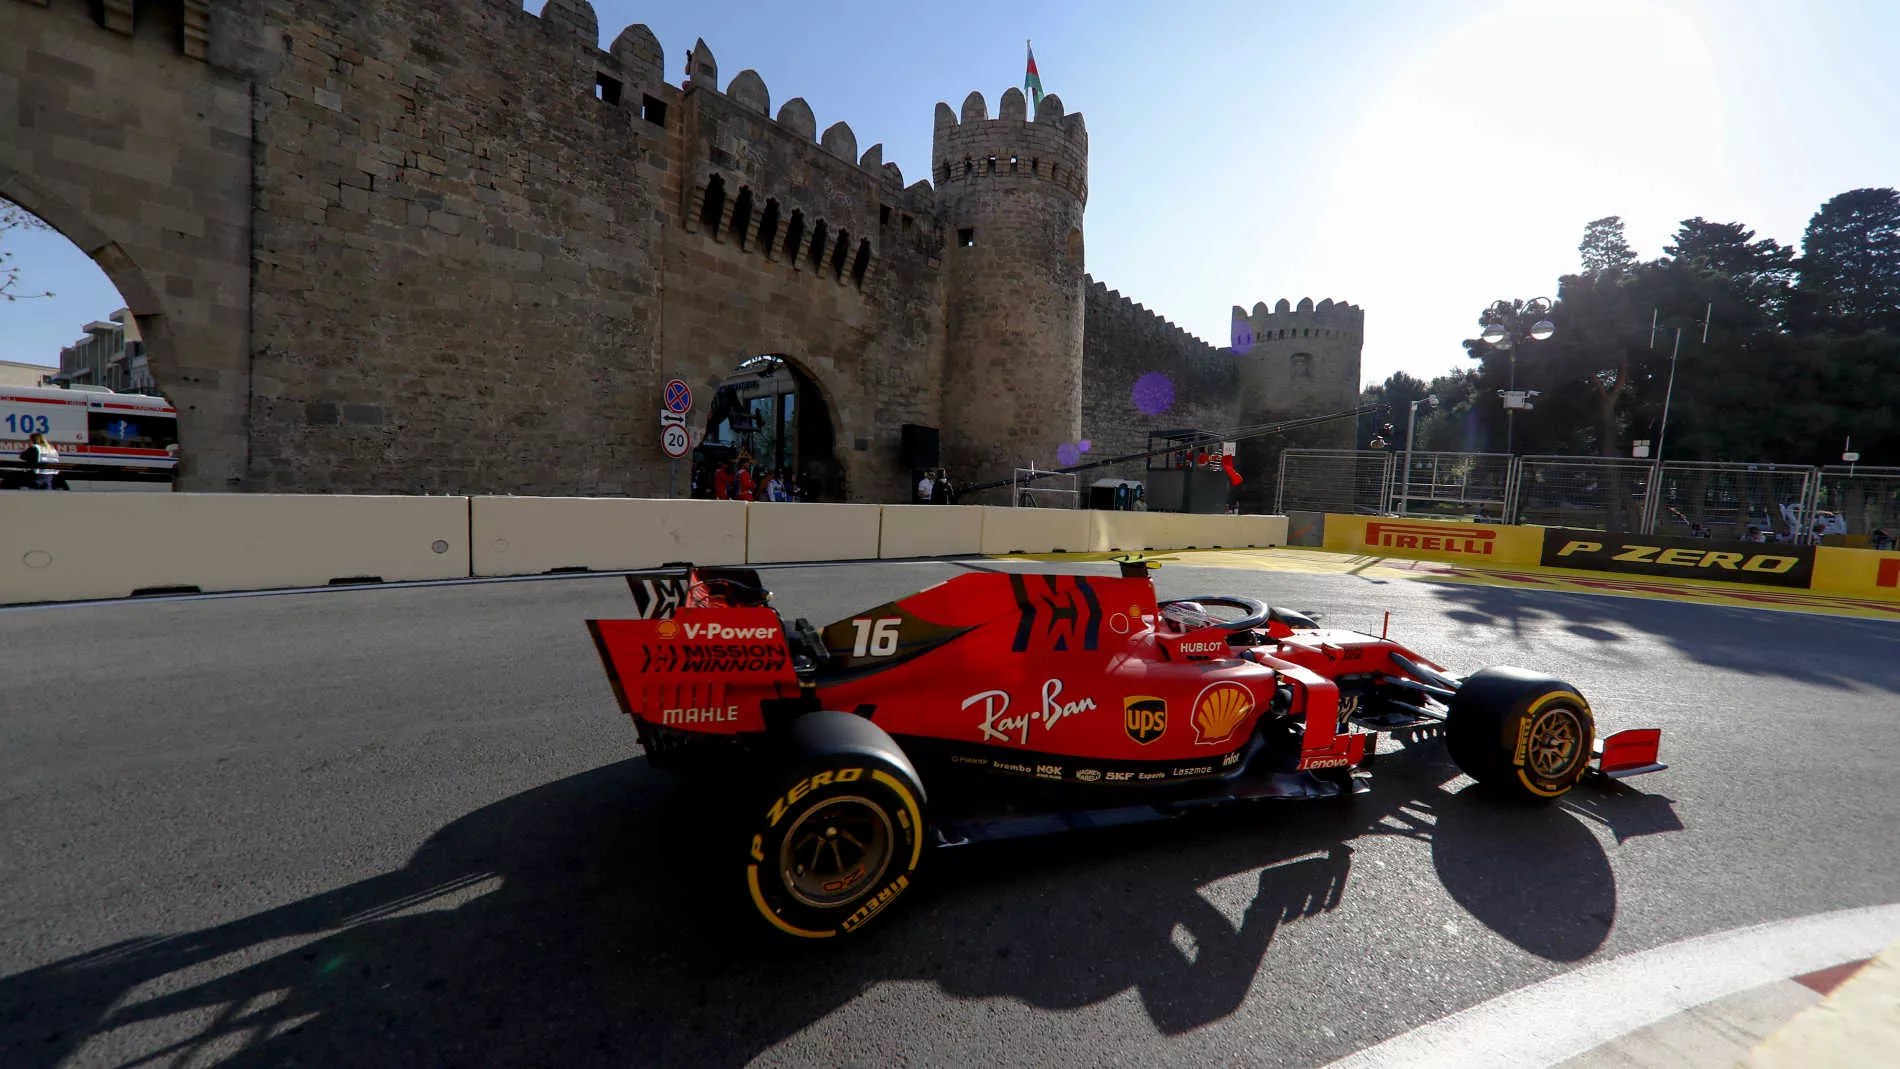 Baku City Circuit in Azerbaijan, Middle East | Racing - Rated 3.6